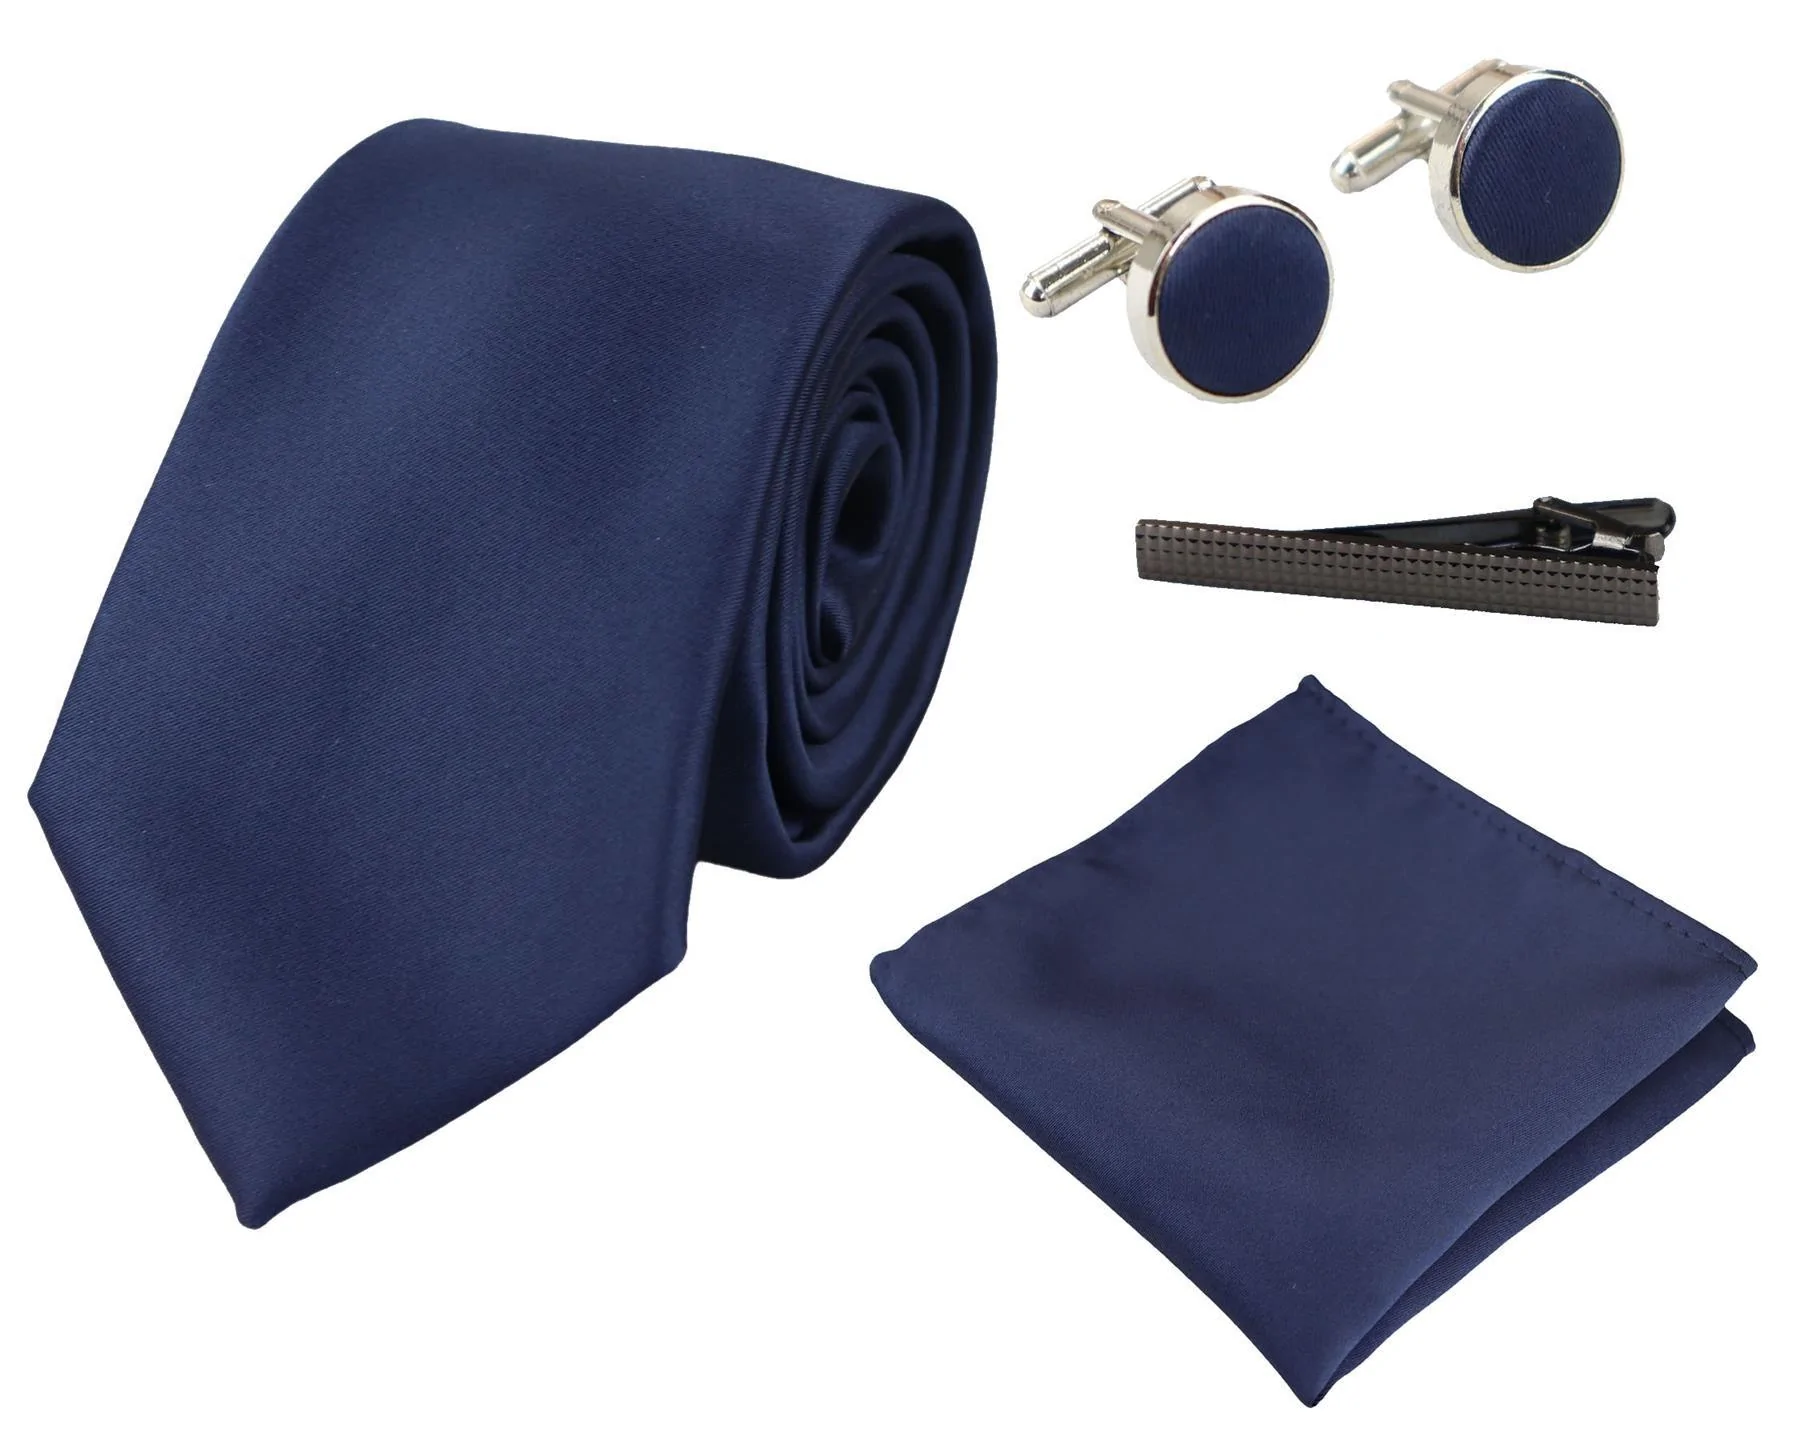 Satin Silk Navy Tie Gift Set Pocket Square Cuff Links Tie Shiny Satin